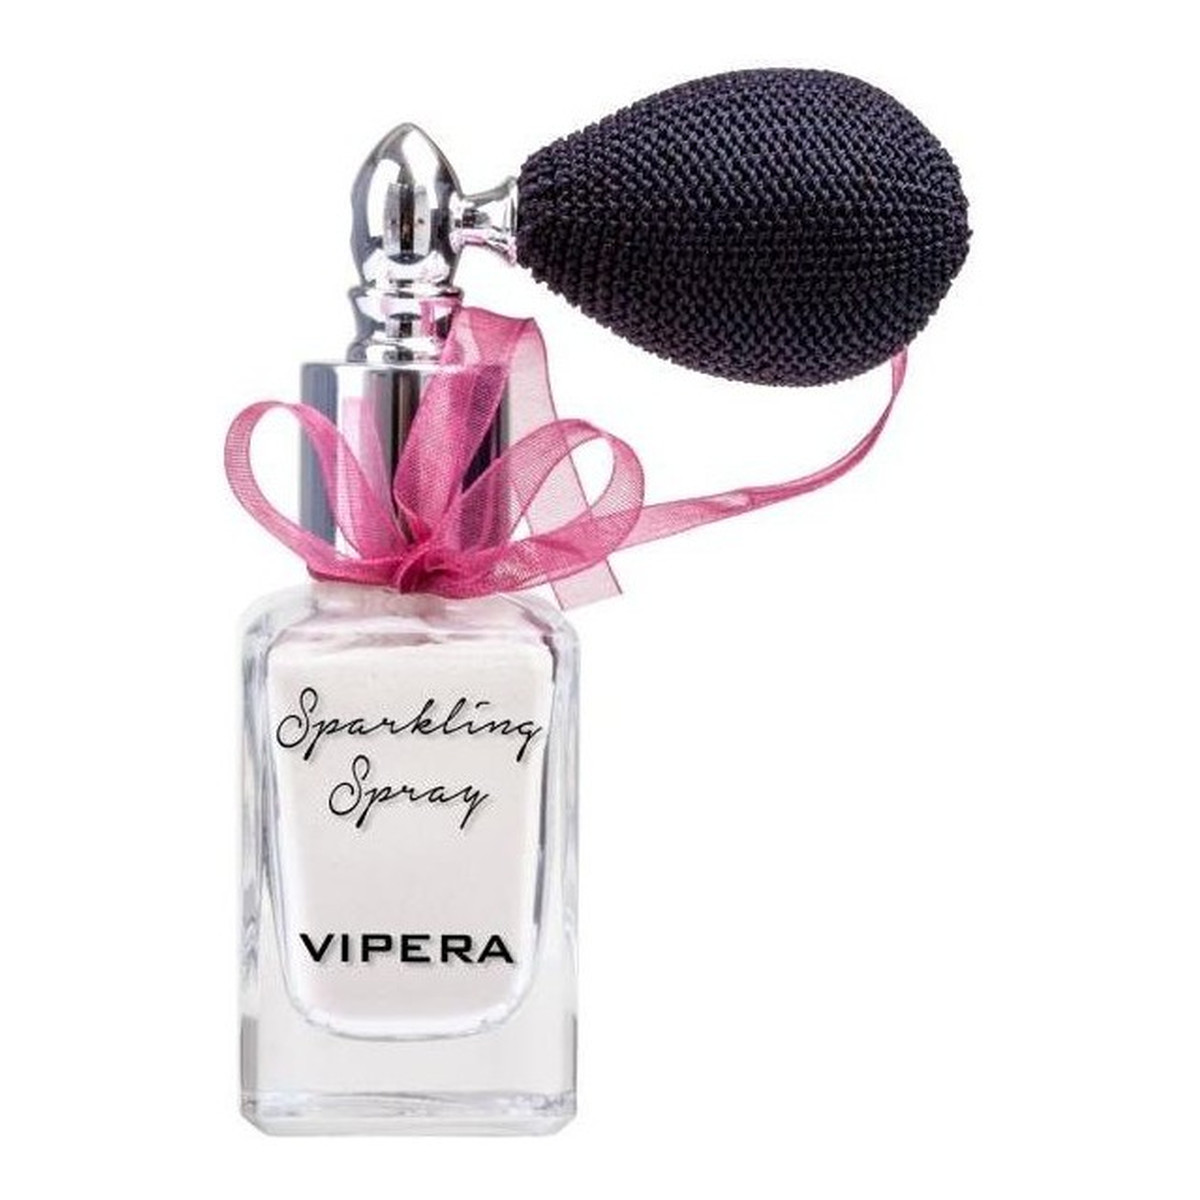 Vipera Sparkling Spray transparentny puder zapachowy 12g